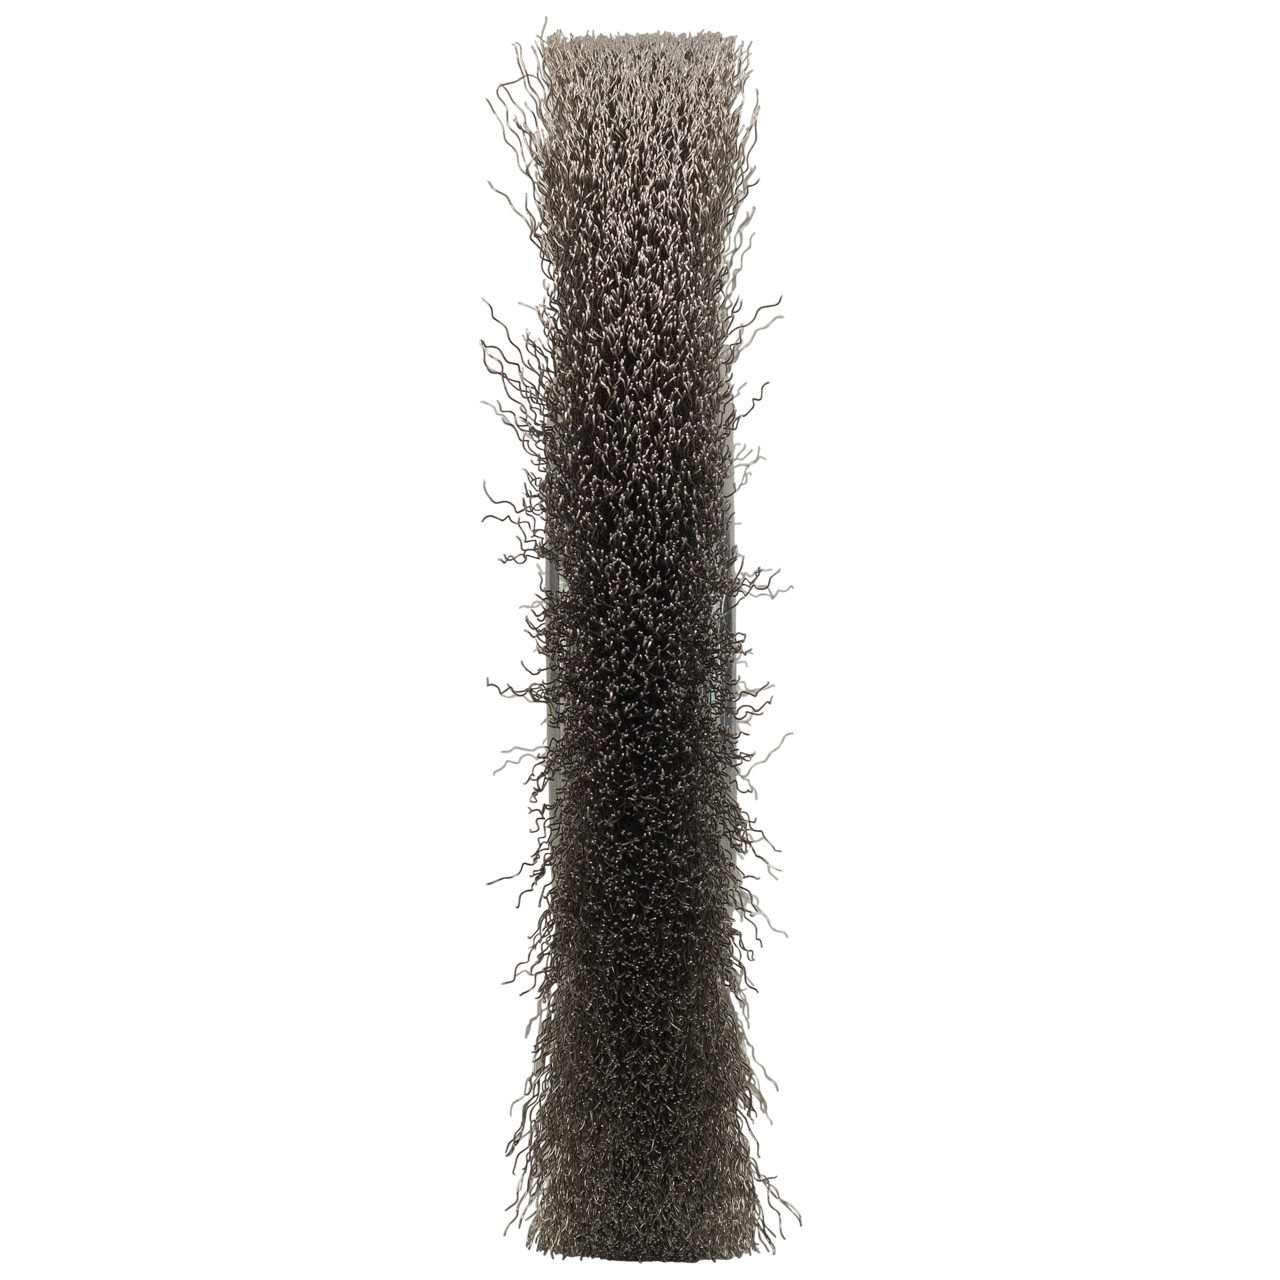 Spazzole rotonde Tyrolit DxLxH 200x45x40x32 Per acciaio inox, forma: 1RDW - (spazzole rotonde), Art. 896124